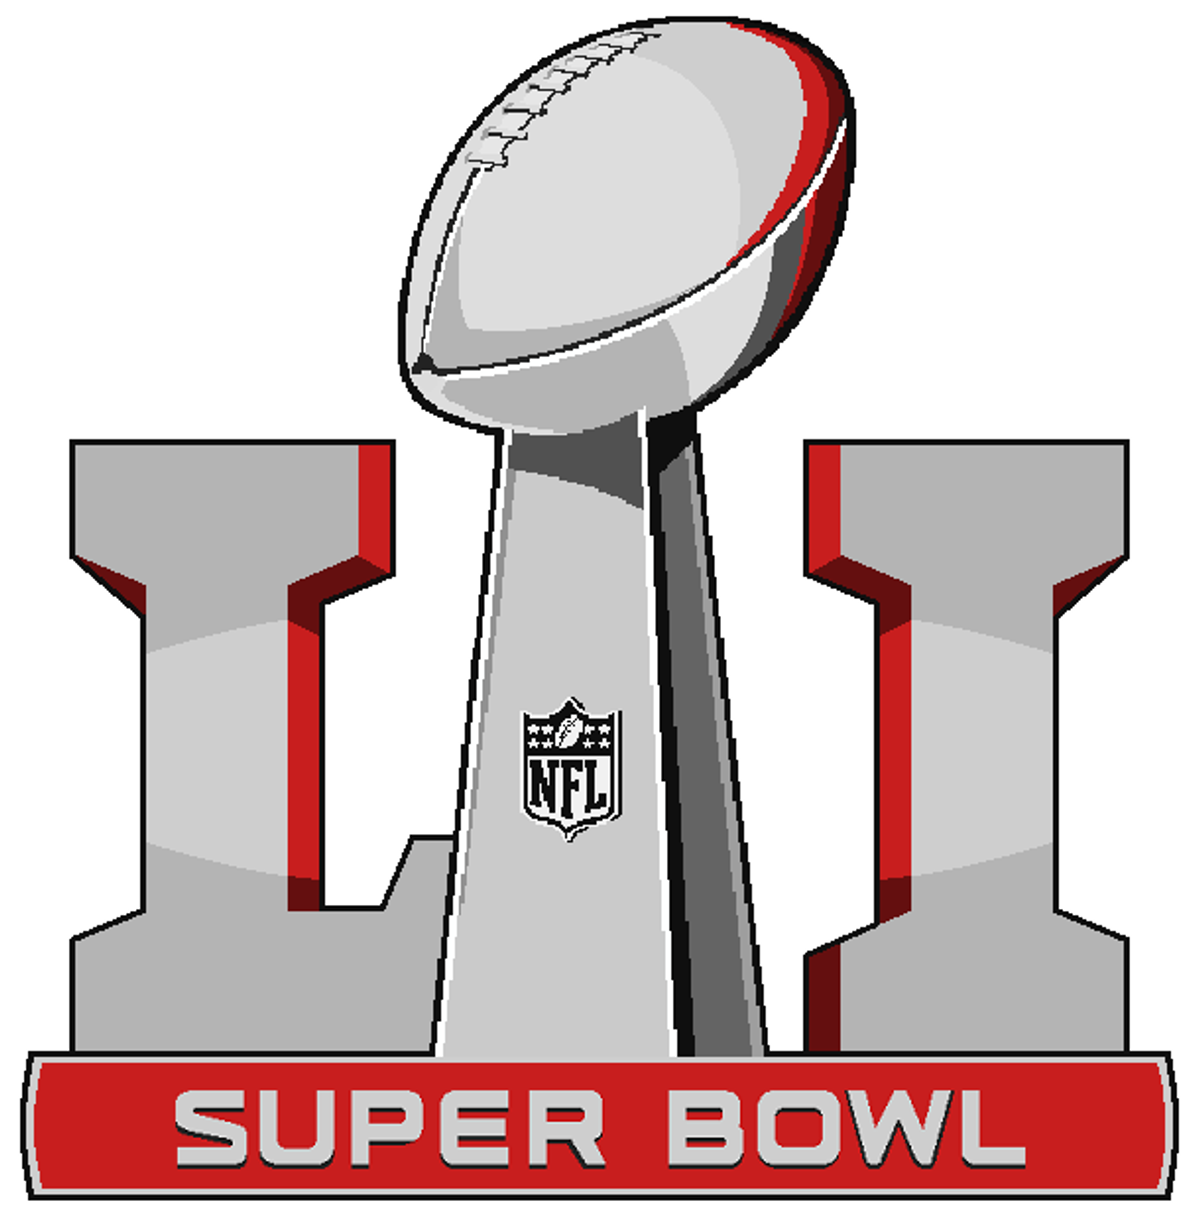 Super Bowl 51 Prediction